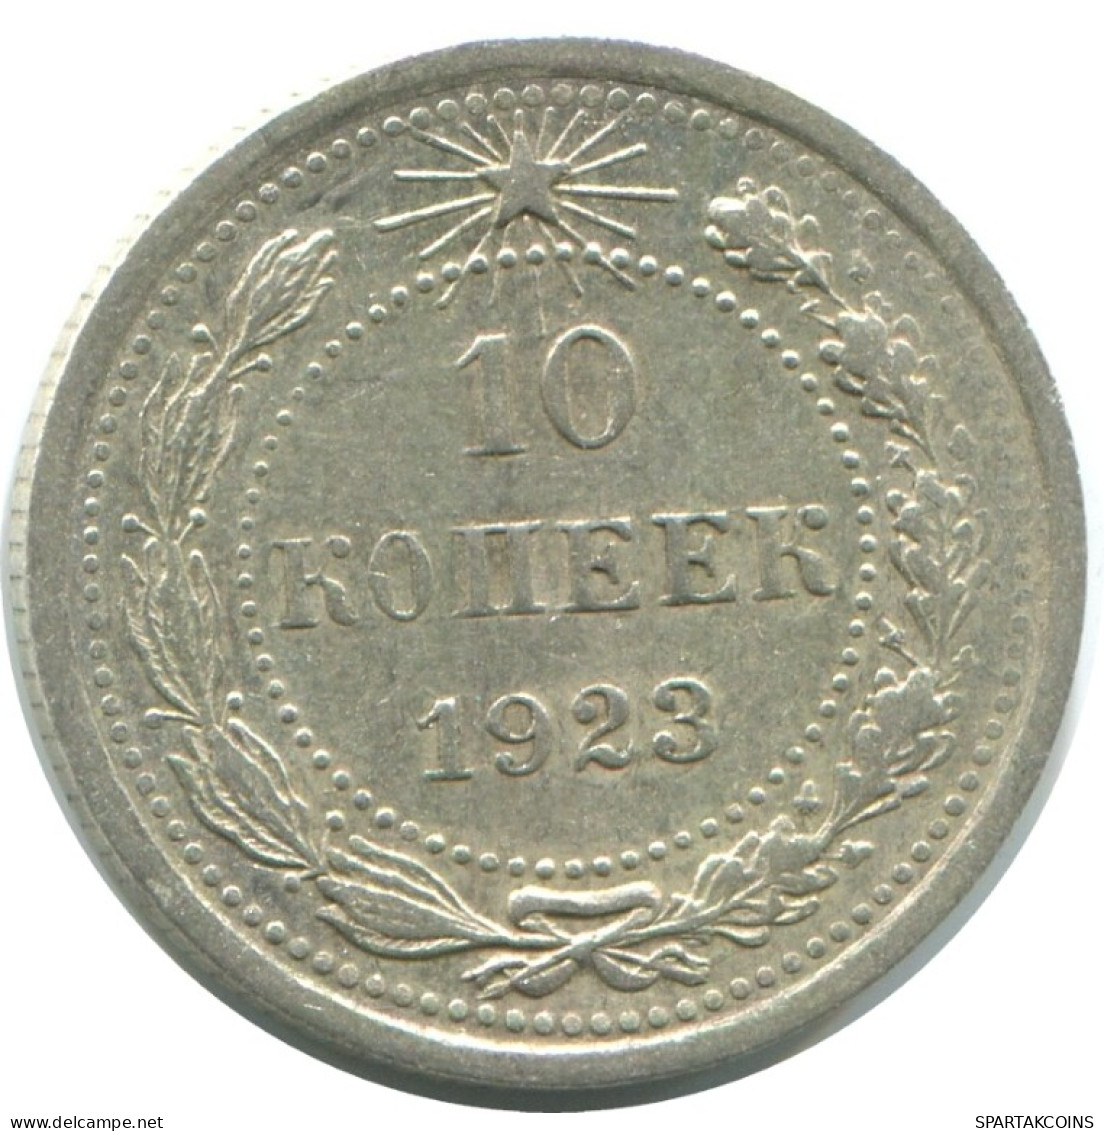 10 KOPEKS 1923 RUSSIA RSFSR SILVER Coin HIGH GRADE #AE914.4.U.A - Russland